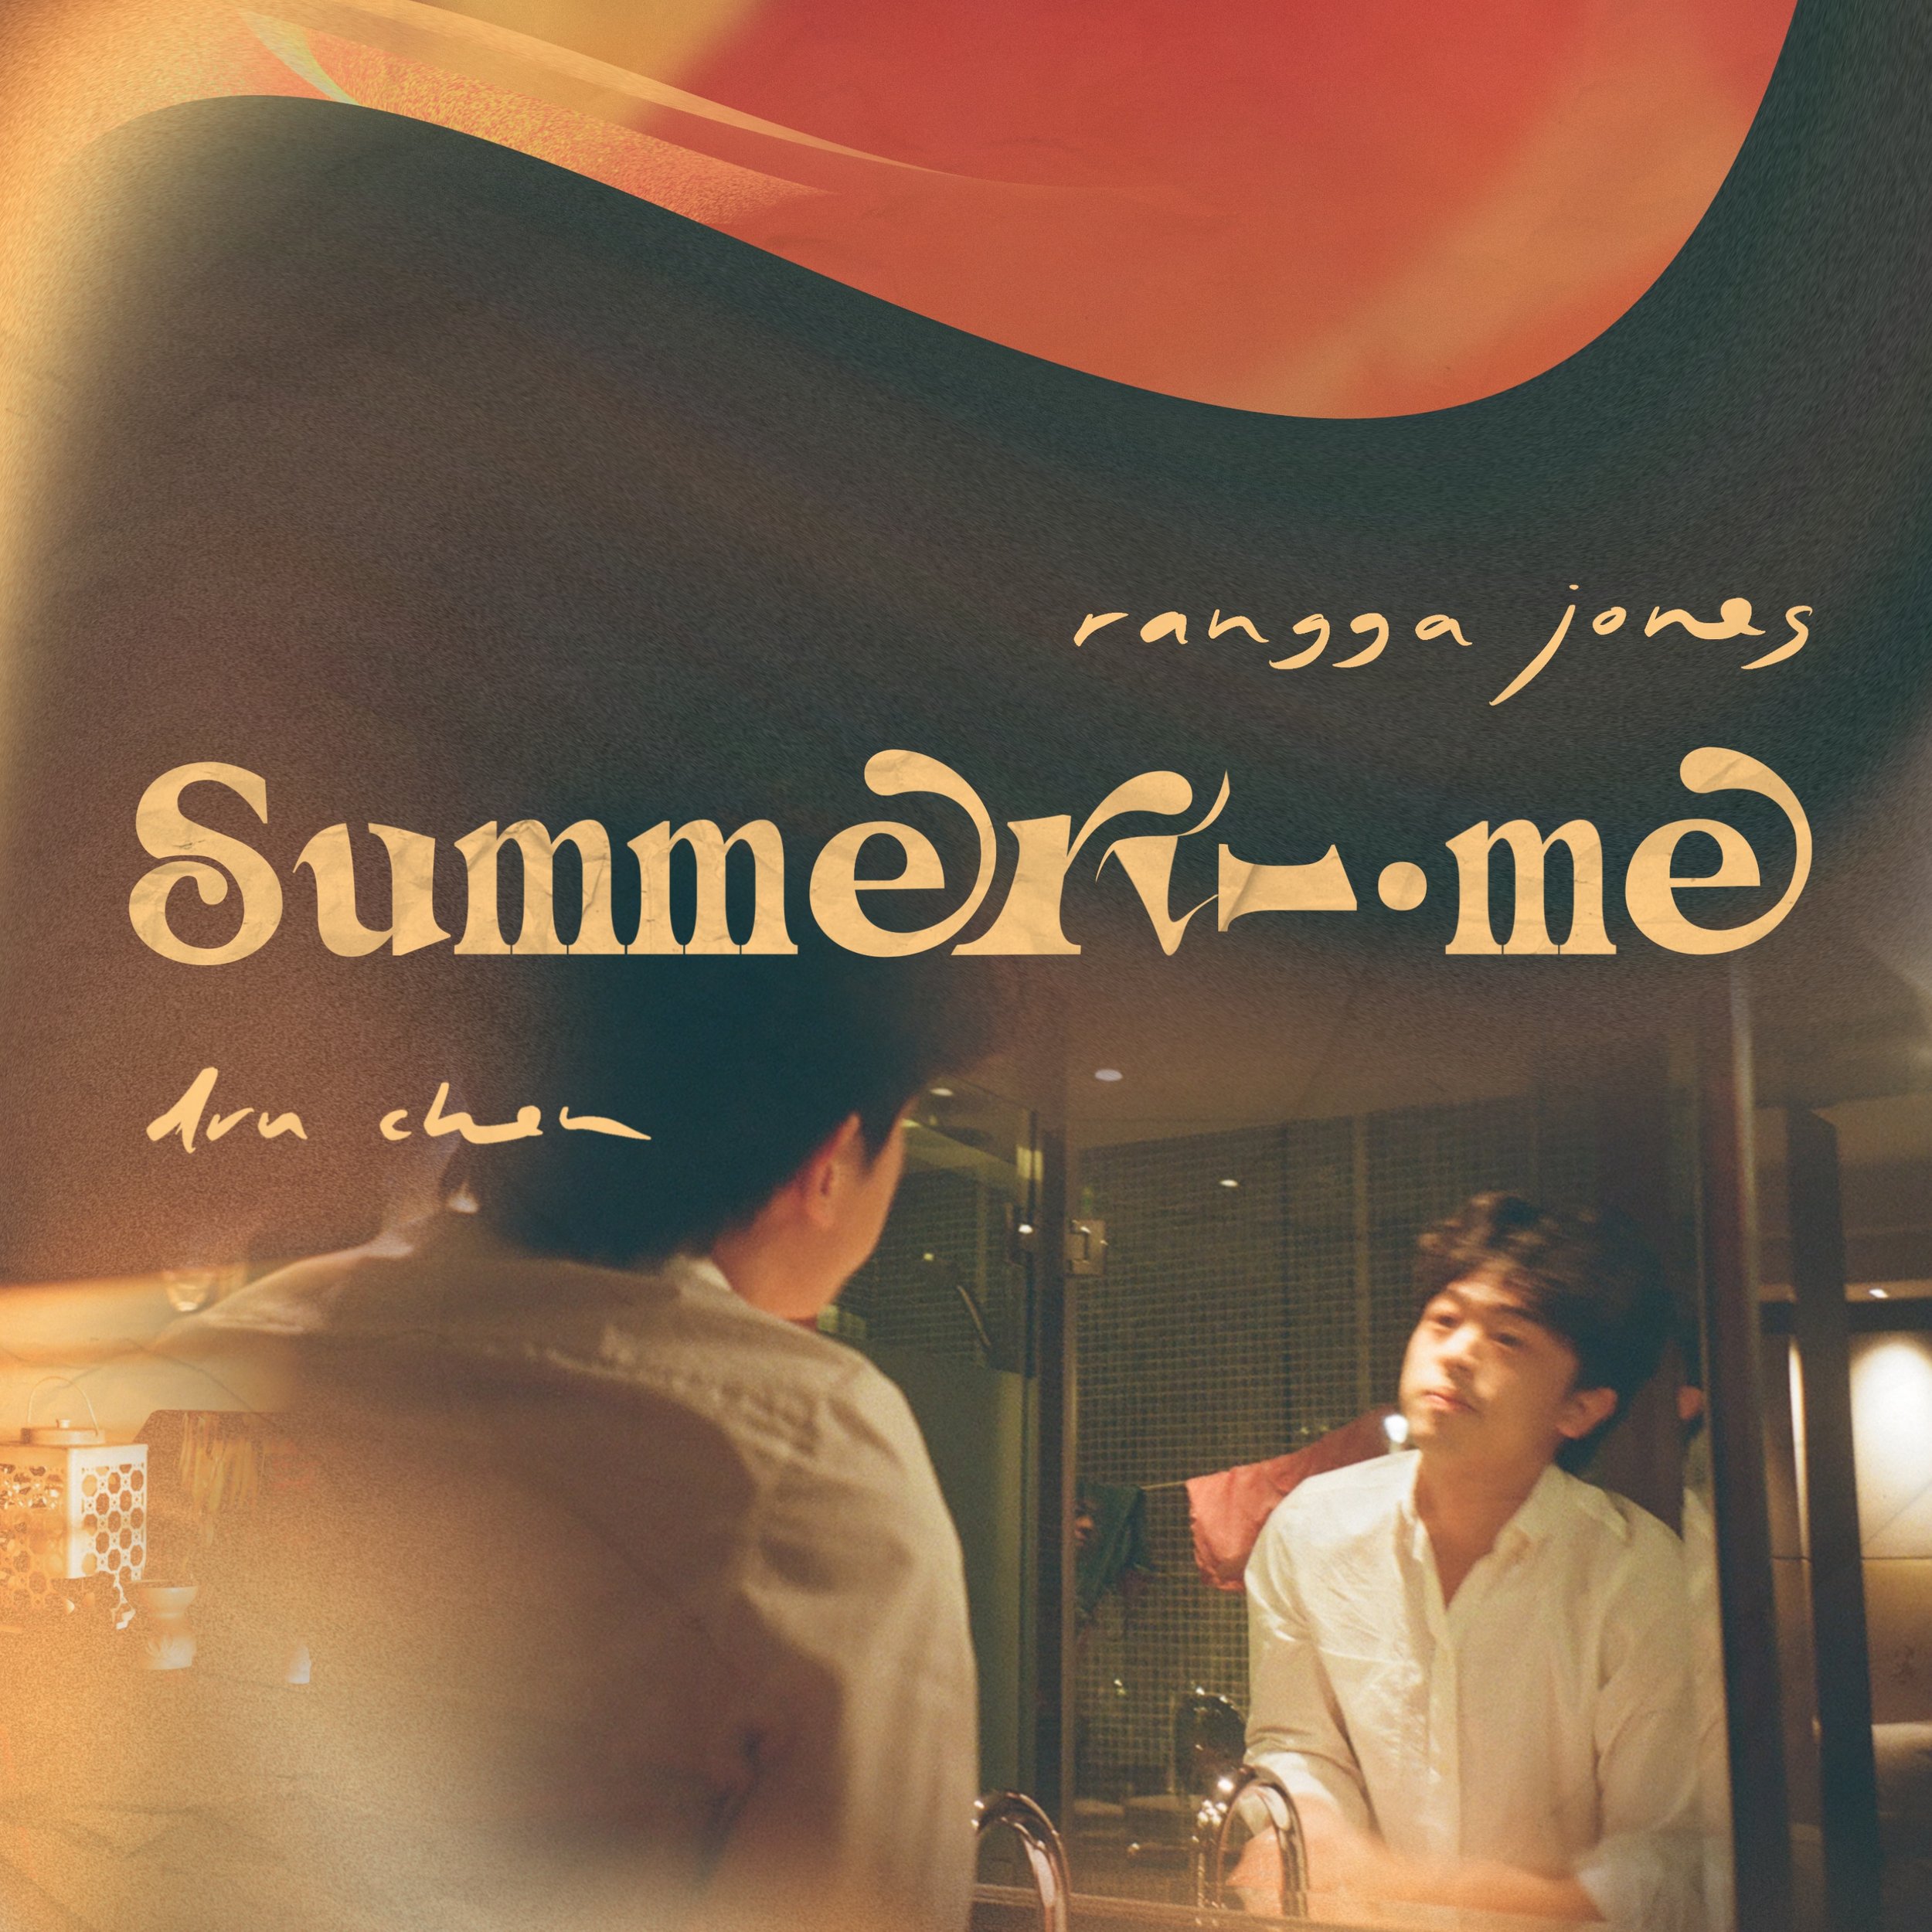 Summertime by Dru Chen with Rangga Jones